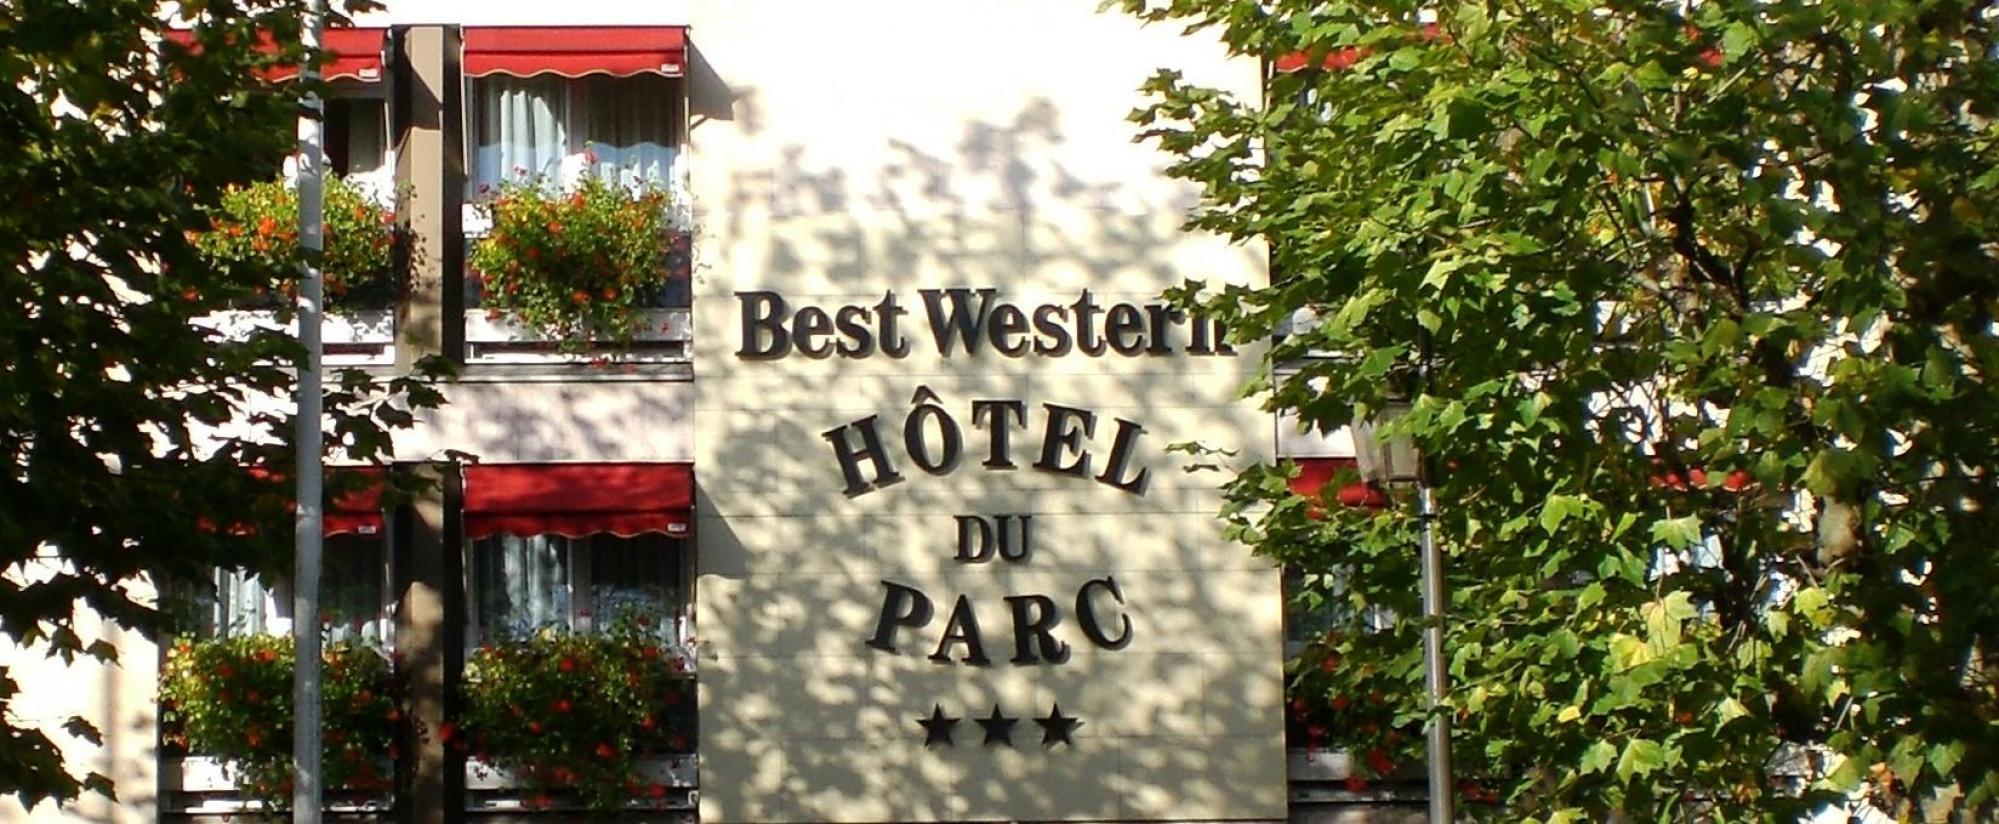 Best Western Hotel du Parc